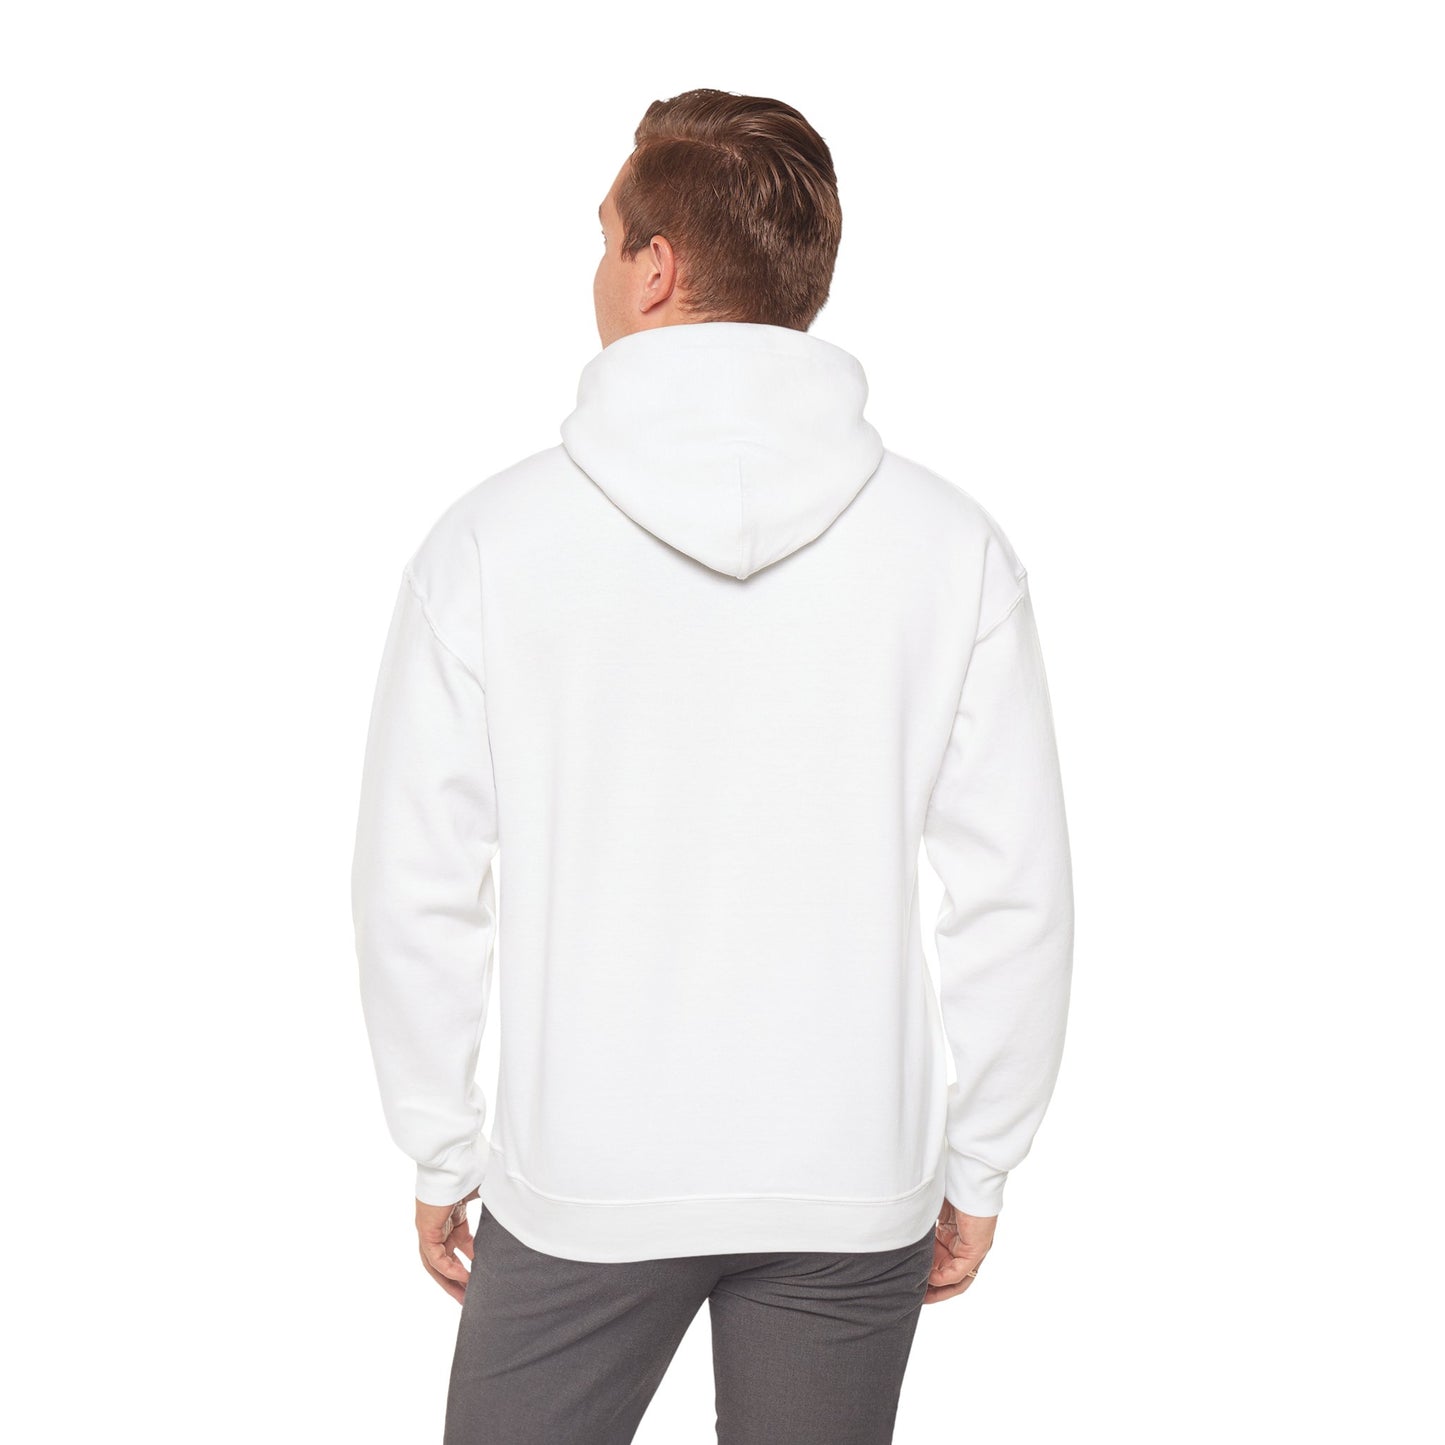 men's #VANDAD hoodie